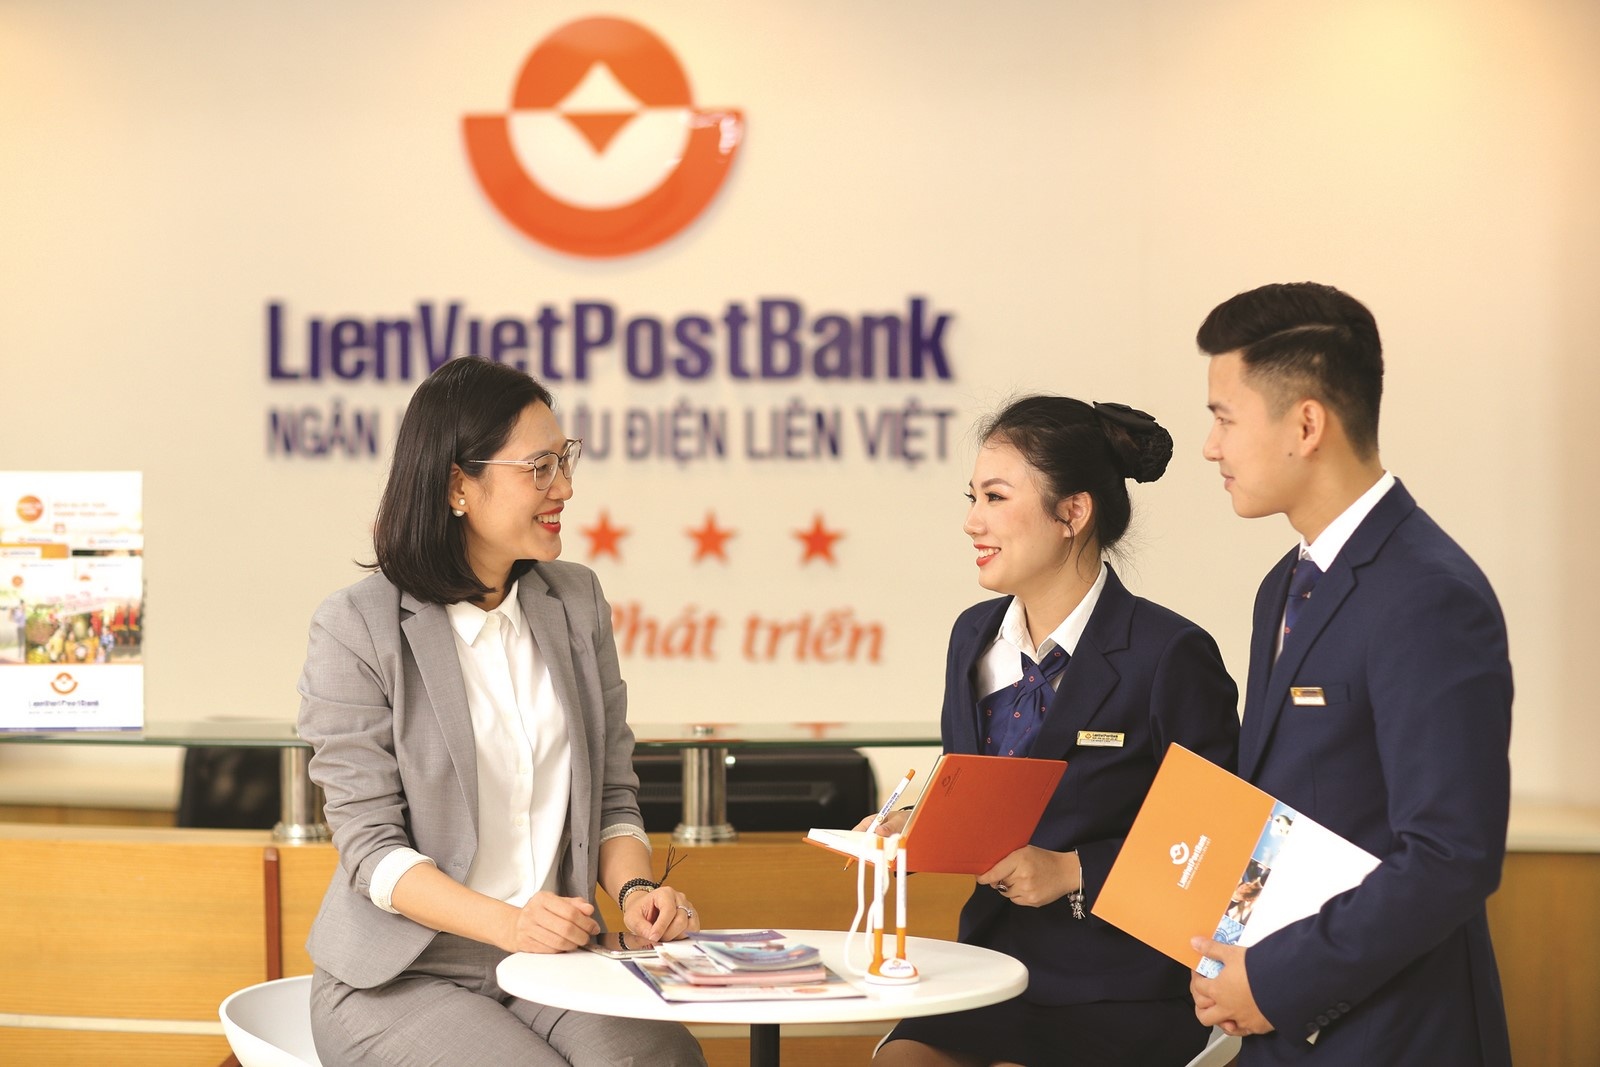 lienvietpostbank ban le la nen tang cot loi cho phat trien ben vung